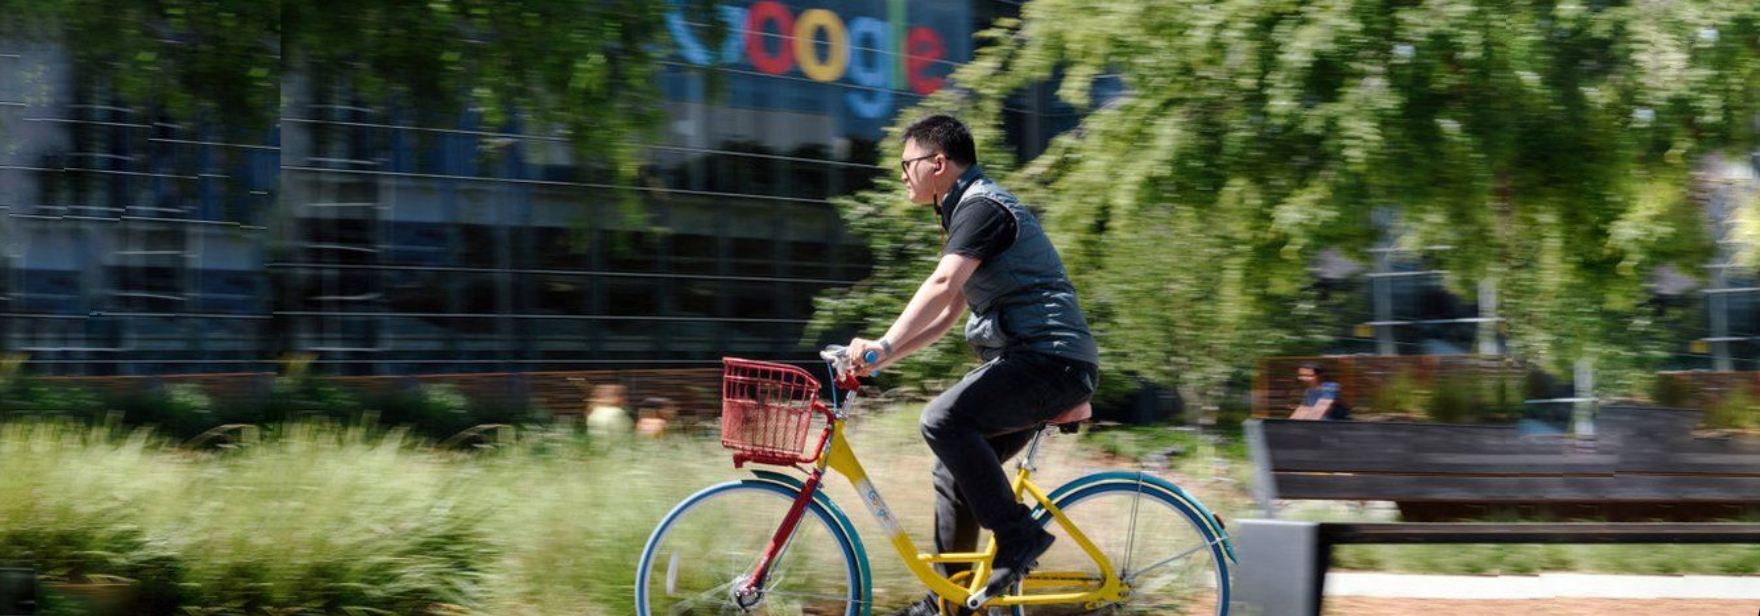 Google хочет сократить зарплату удалённым сотрудникам 